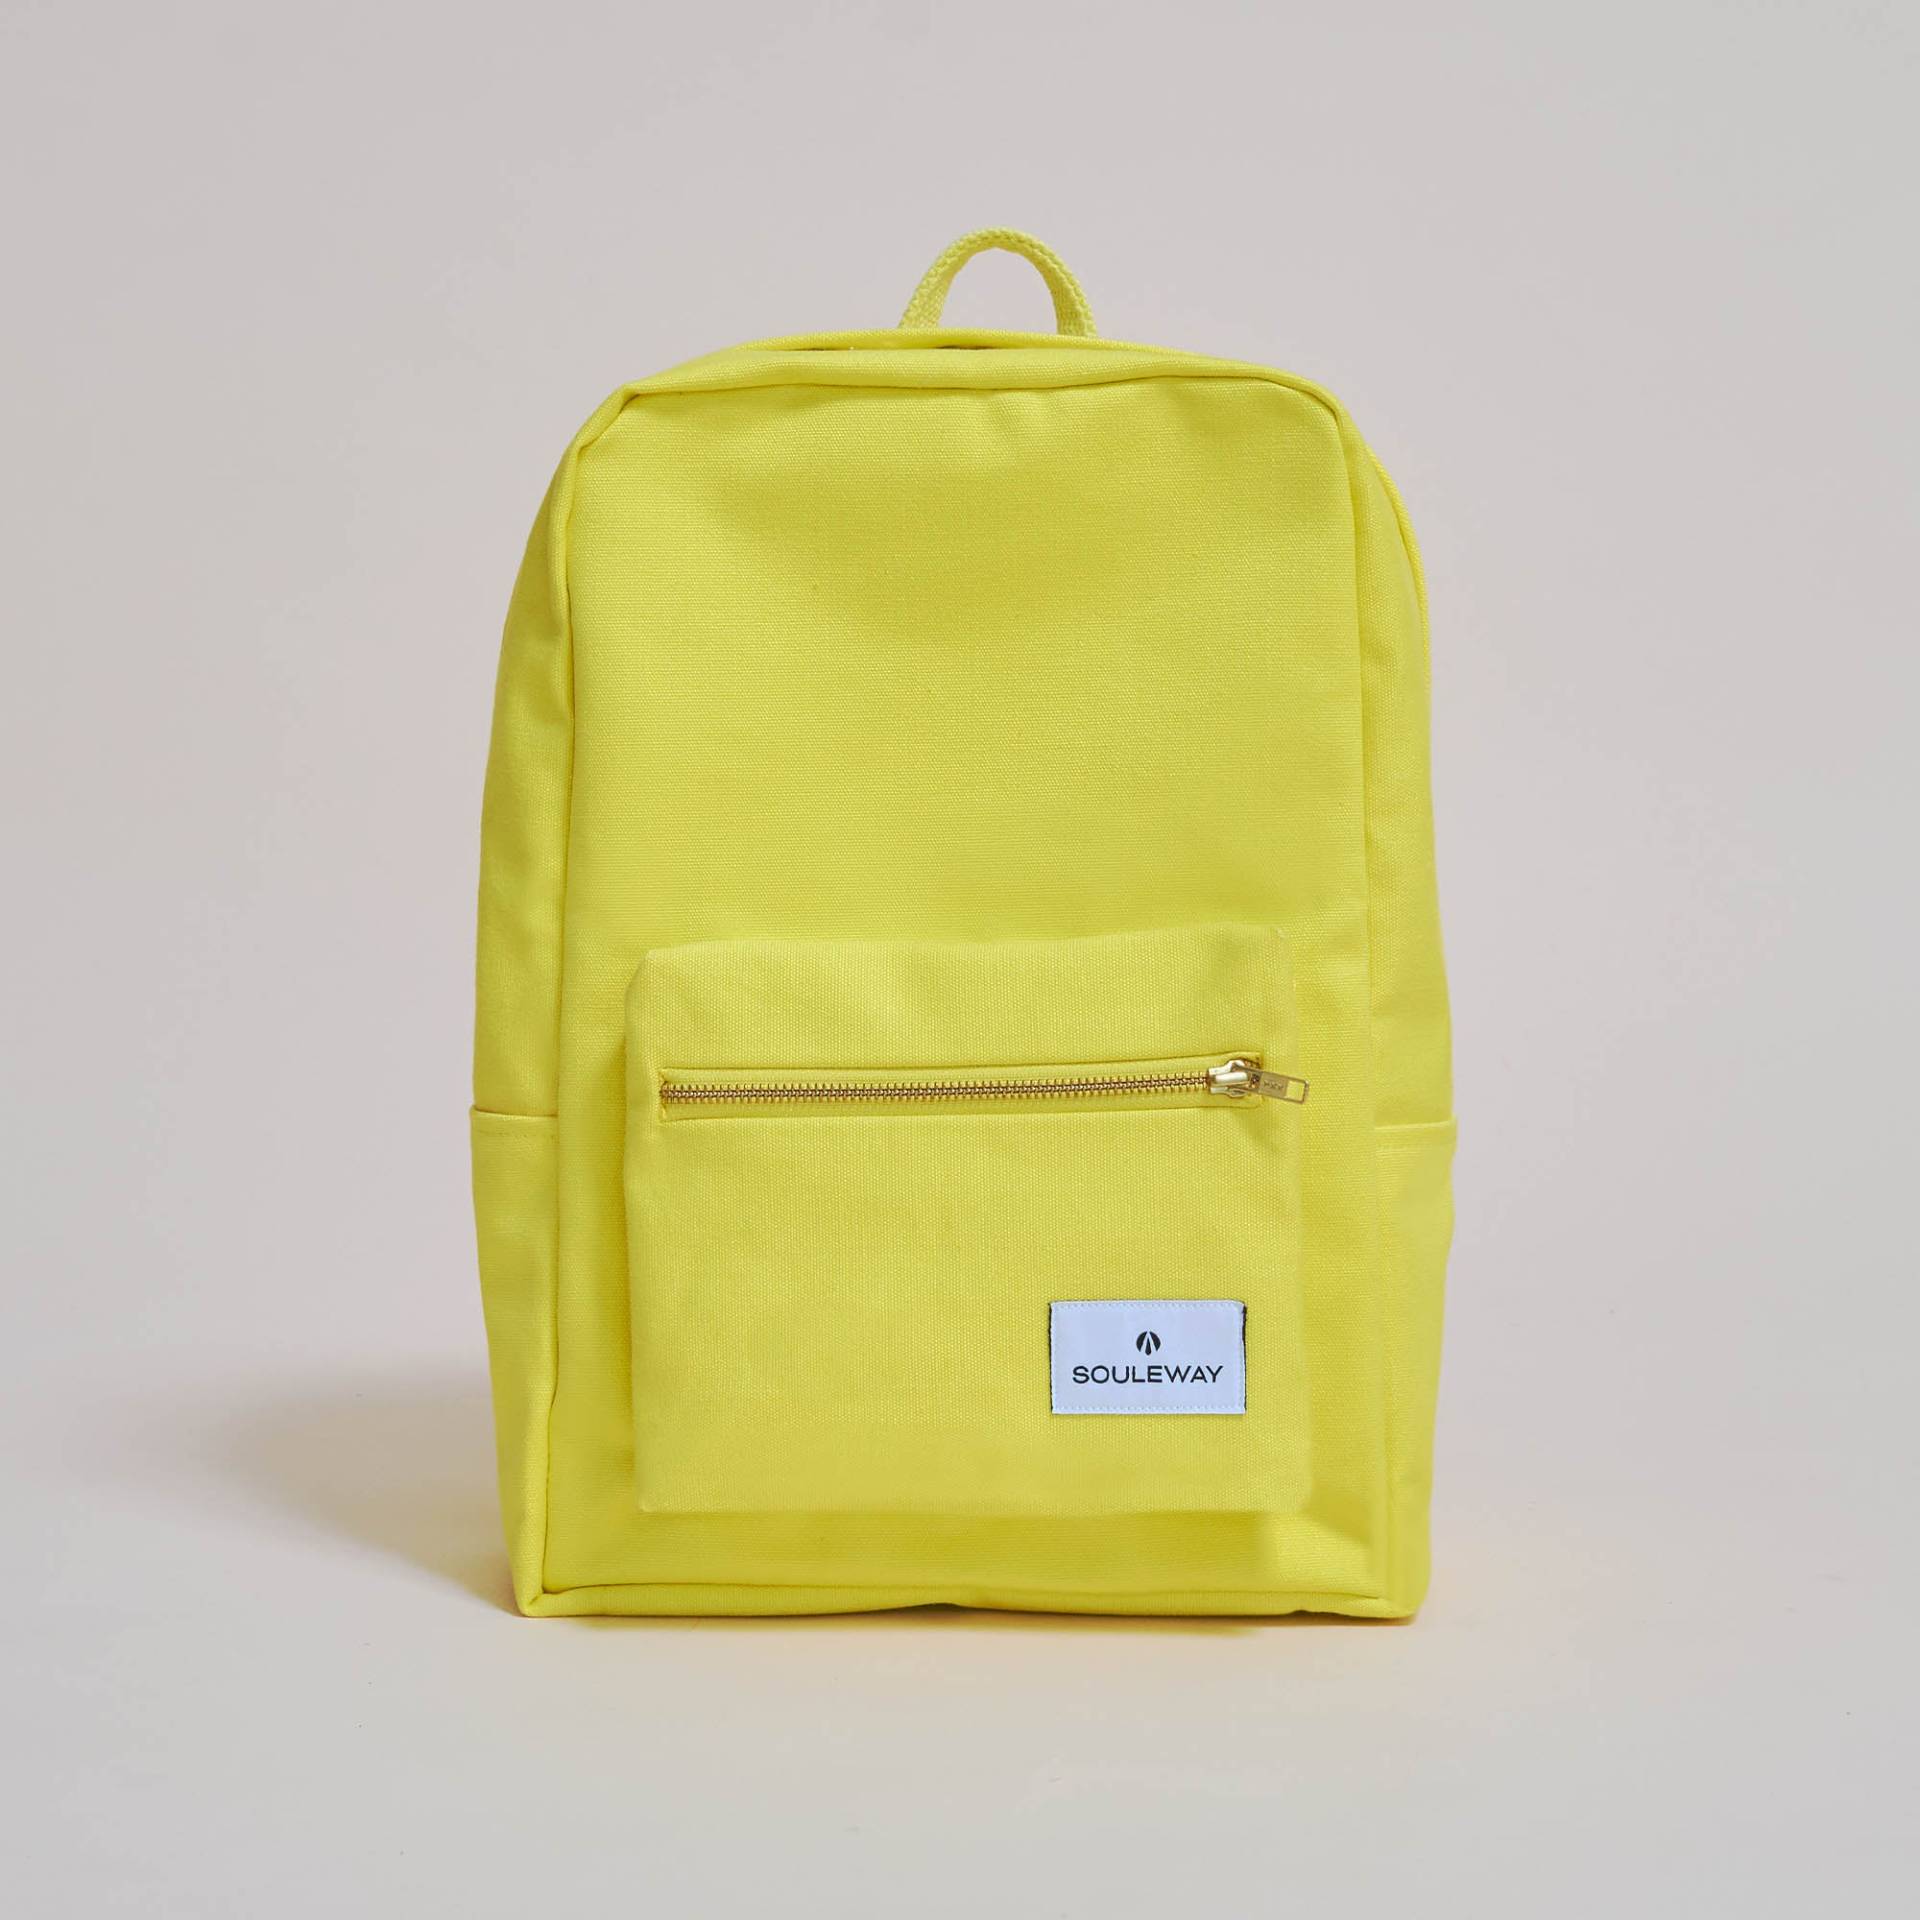 SOULEWAY - Casual Backpack, Rucksack, 12 Liter Volumen, Laptopfach 13 Zoll, Made in Germany, Handgepäck, vegan, wasserabweisend, Bright Lemon von Souleway